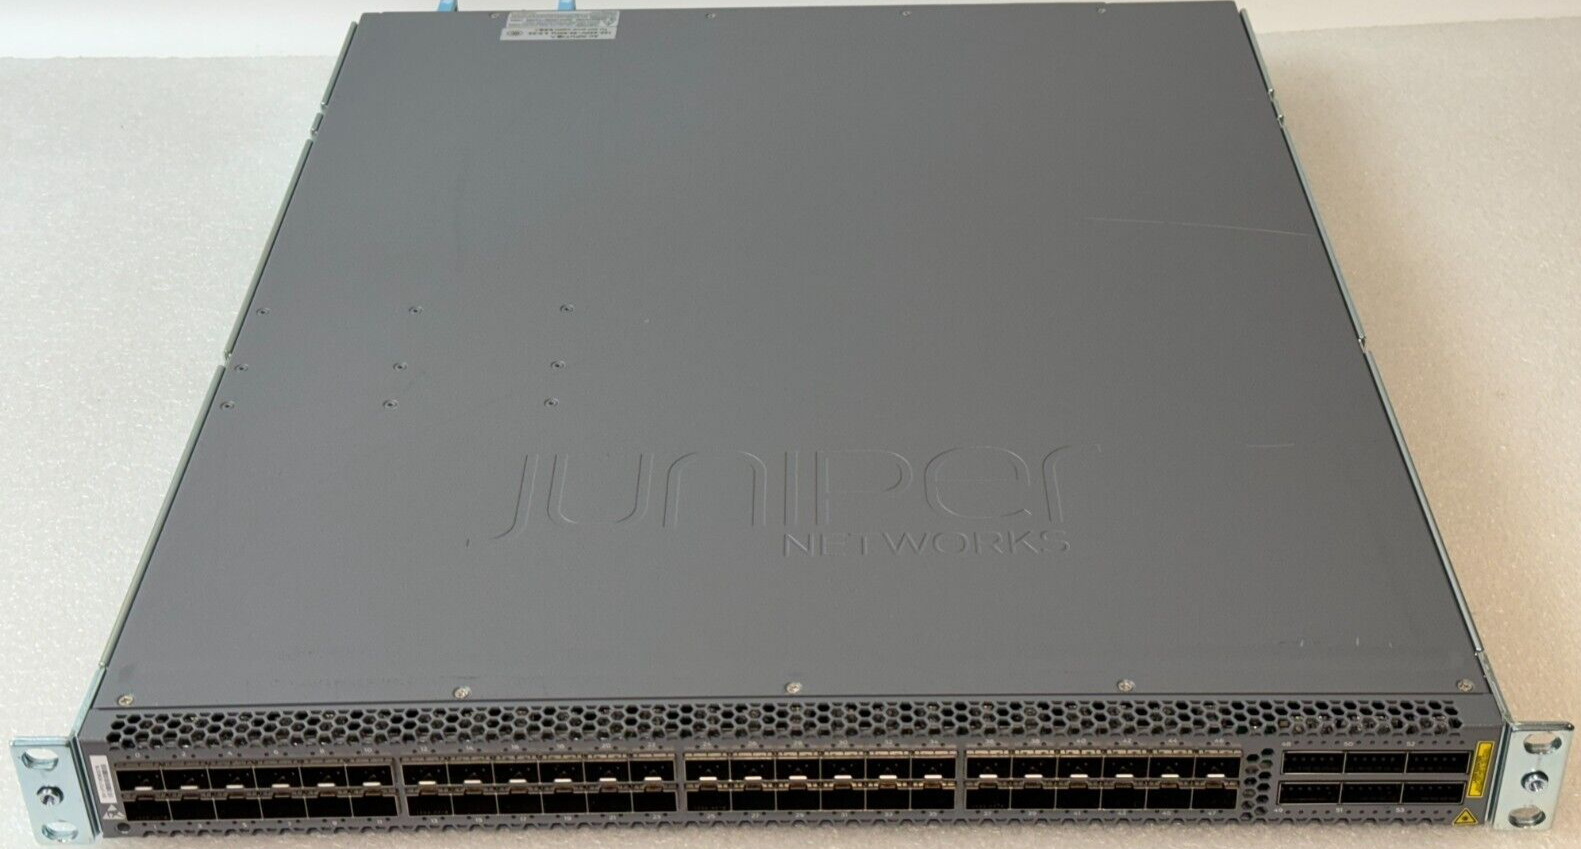 Juniper QFX5100-48S-3AFI 48 Port SFP 10G 6 Port QSFP 40G 2X AC 650W QTY AVAIL